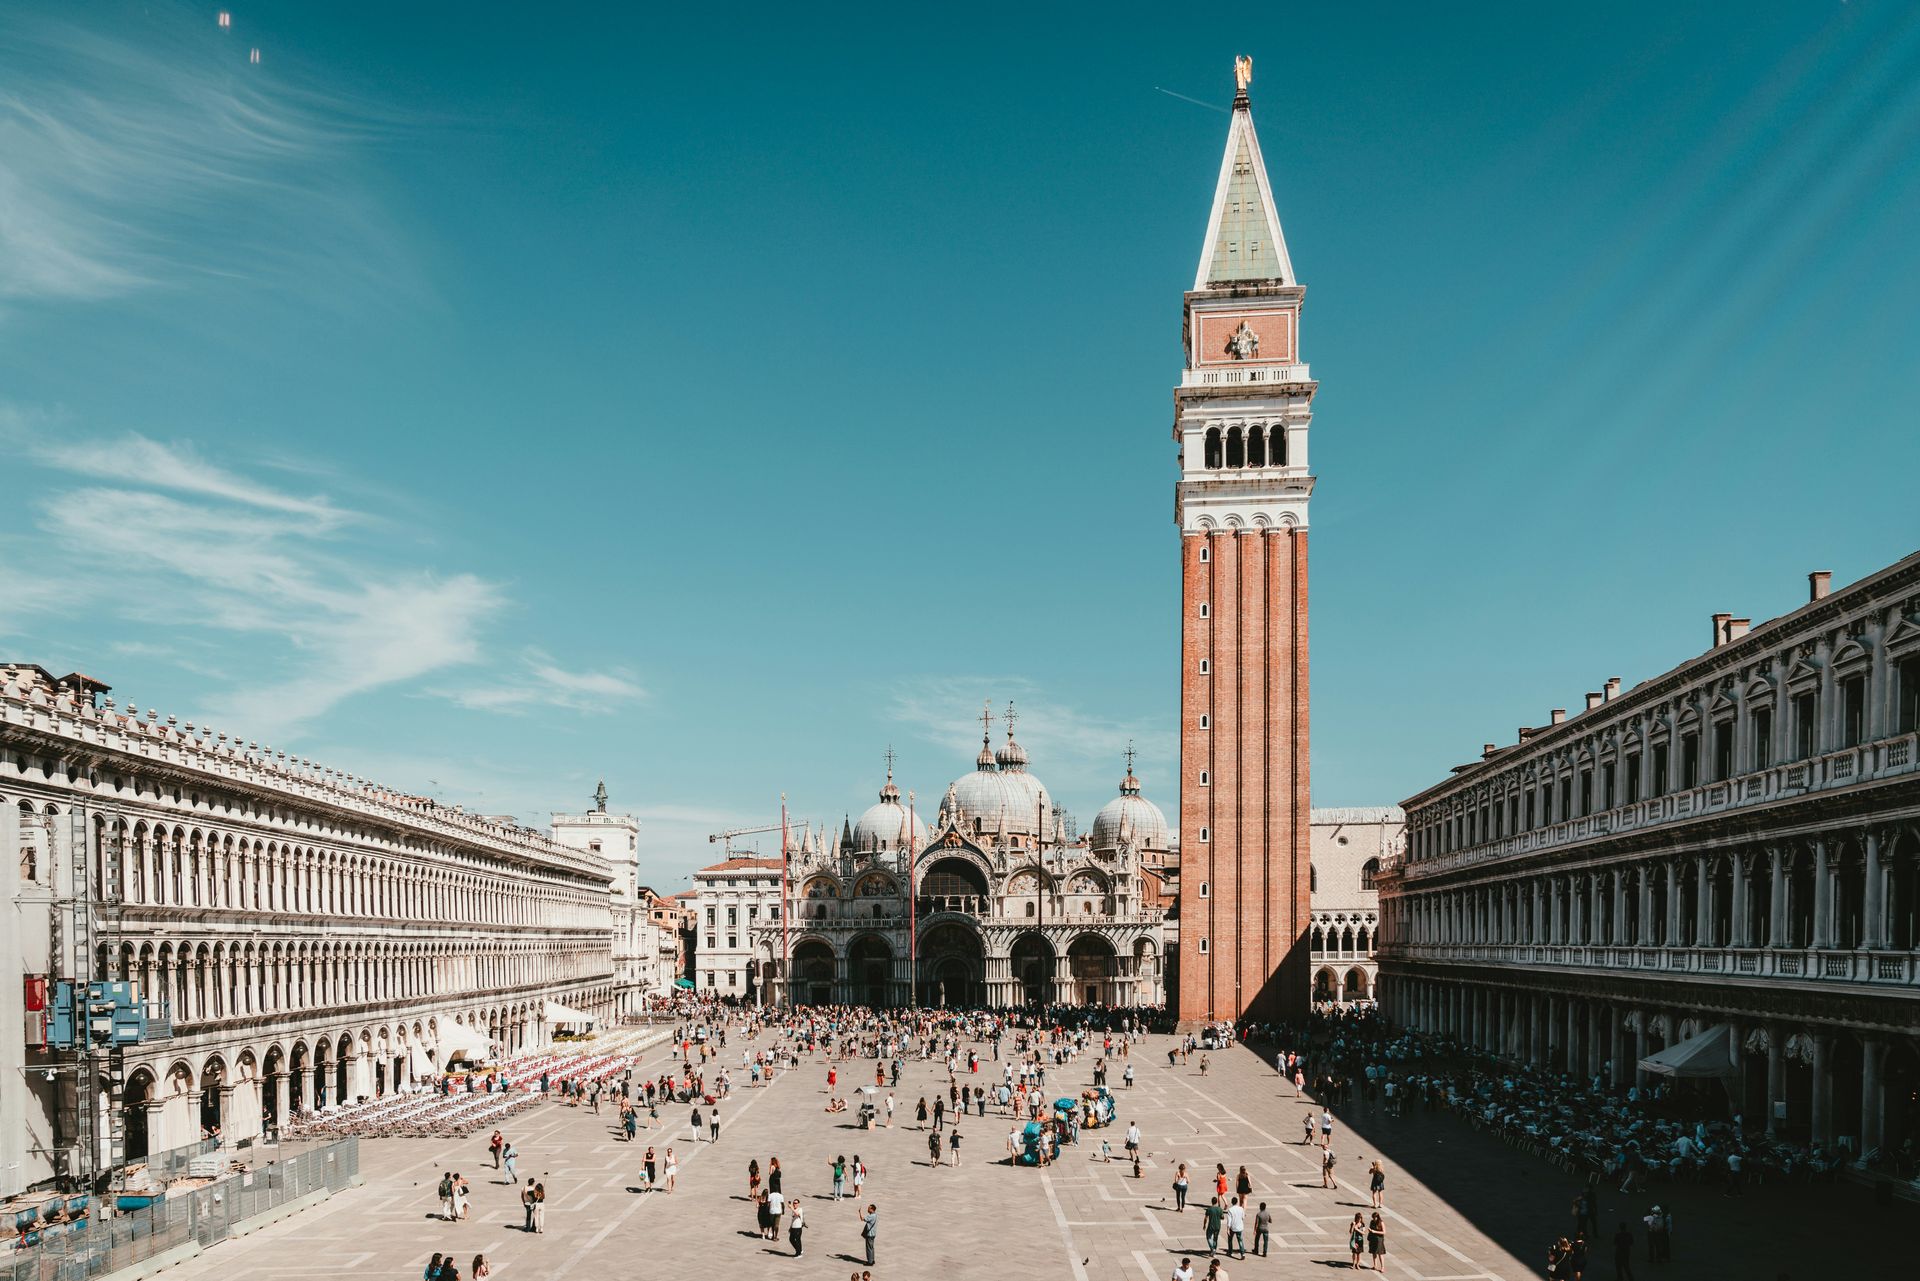 Venice's Piazza San Marco